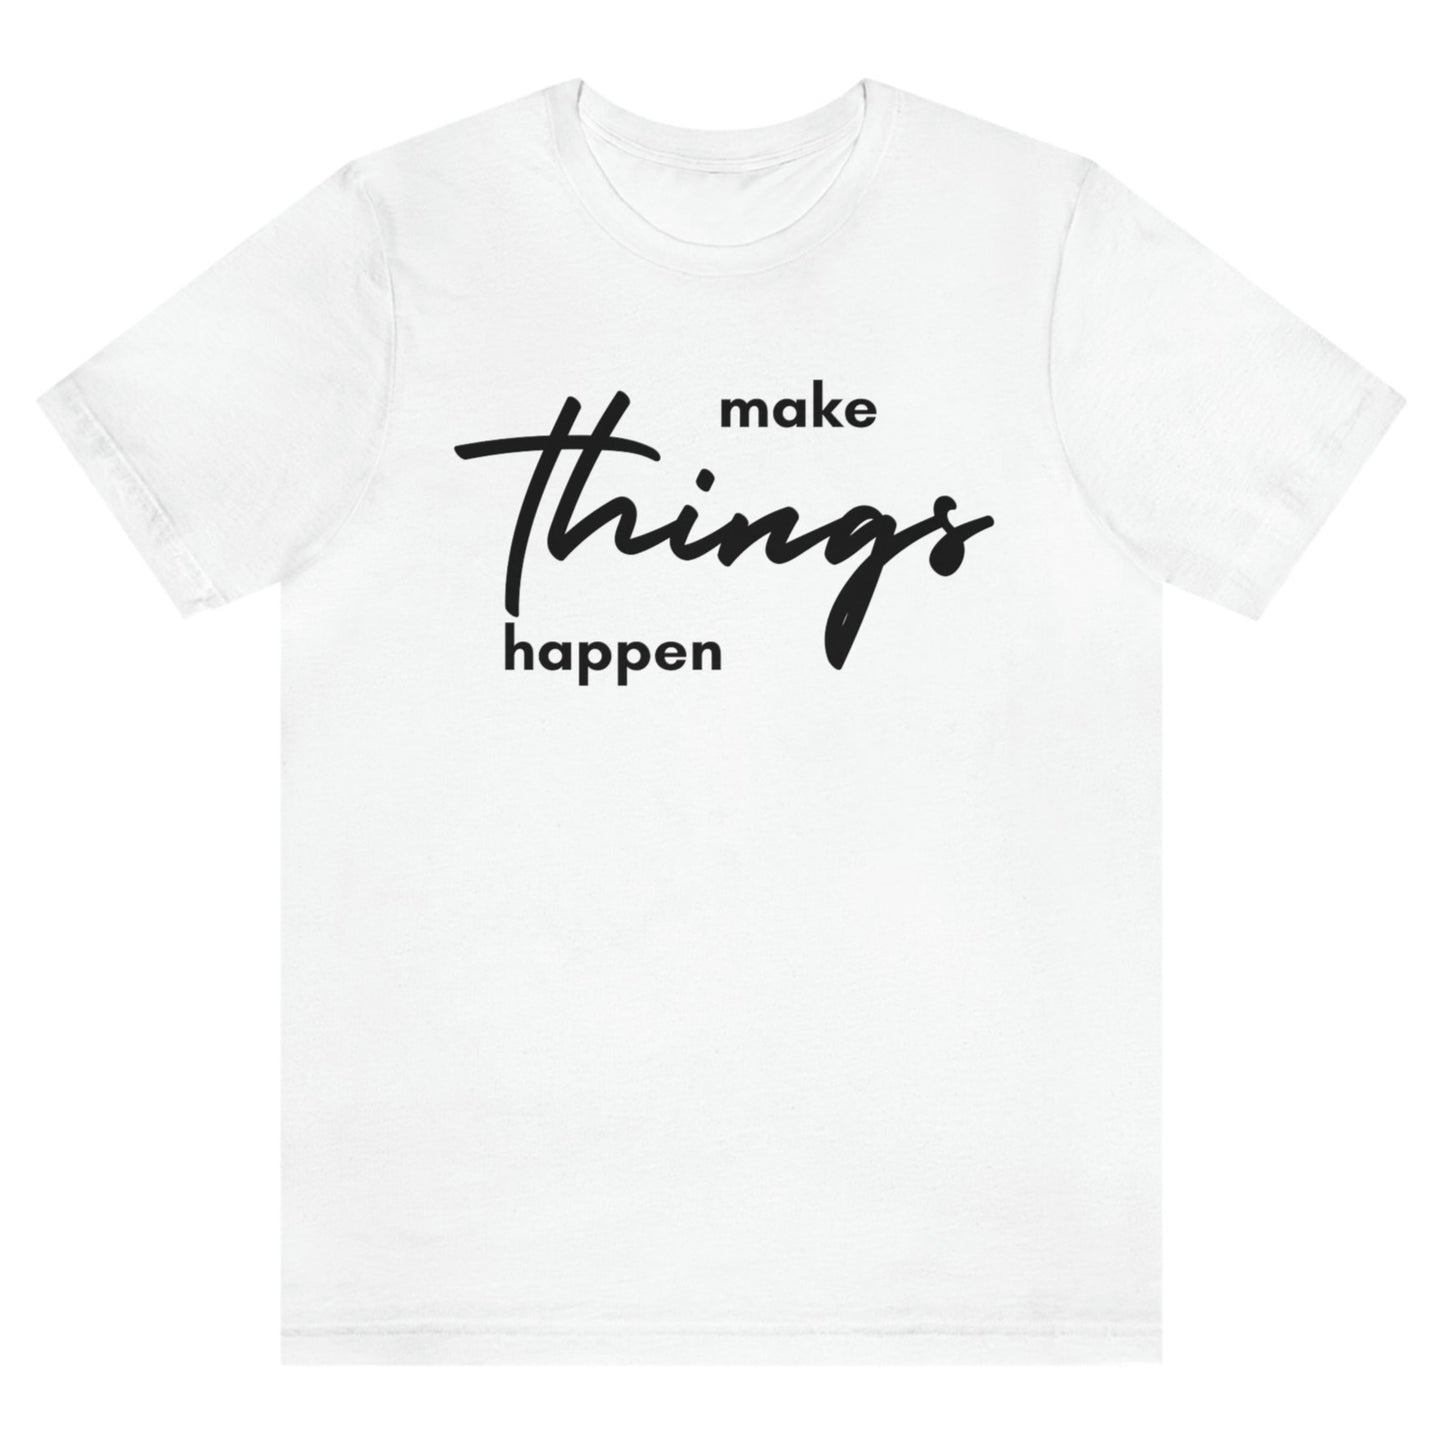 make-things-happen-white-t-shirt-women-inspiring